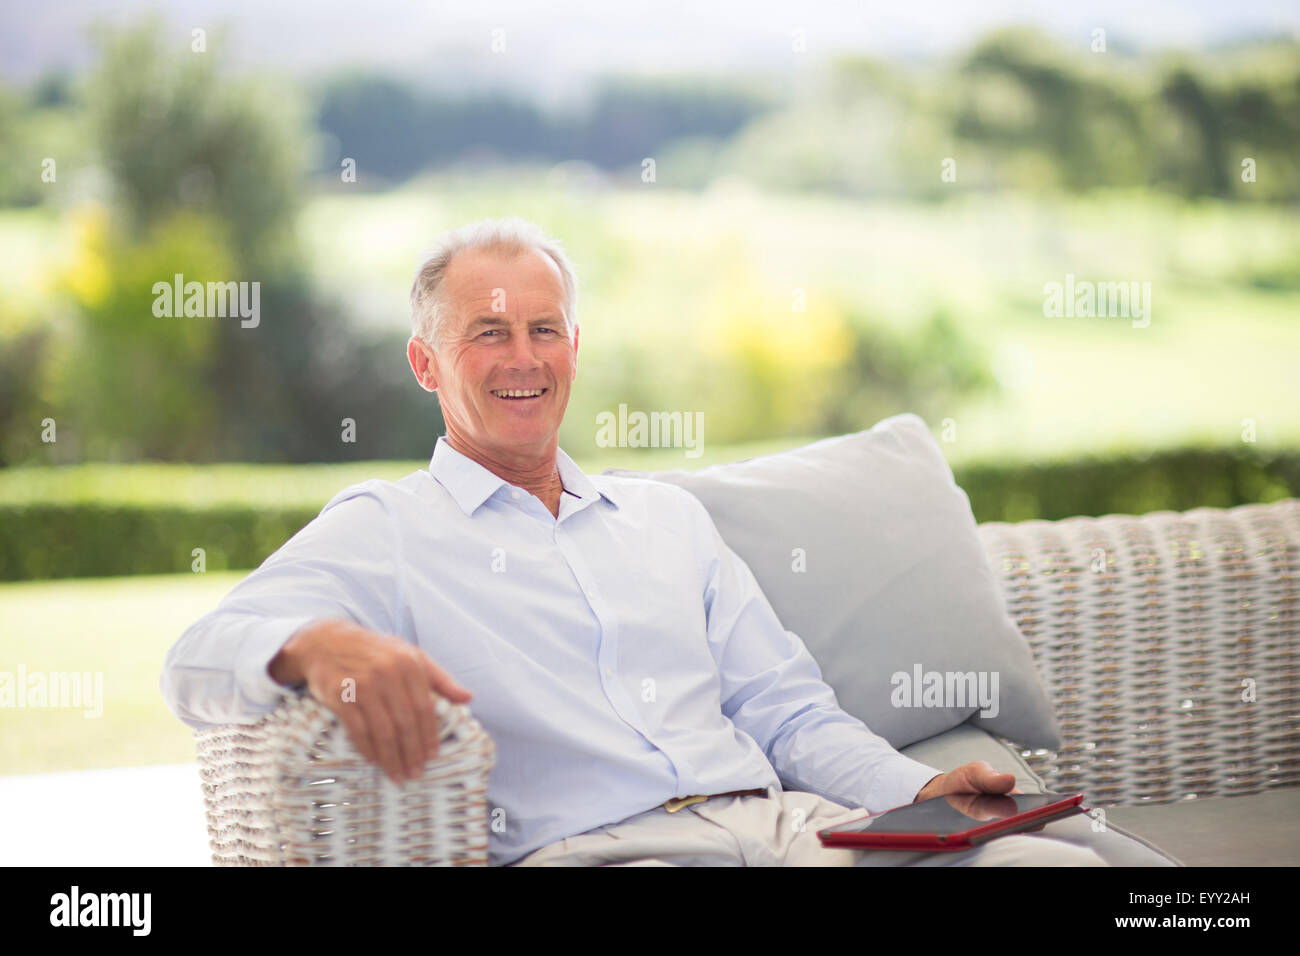 Caucasian man using digital tablet on sofa outdoors Stock Photo